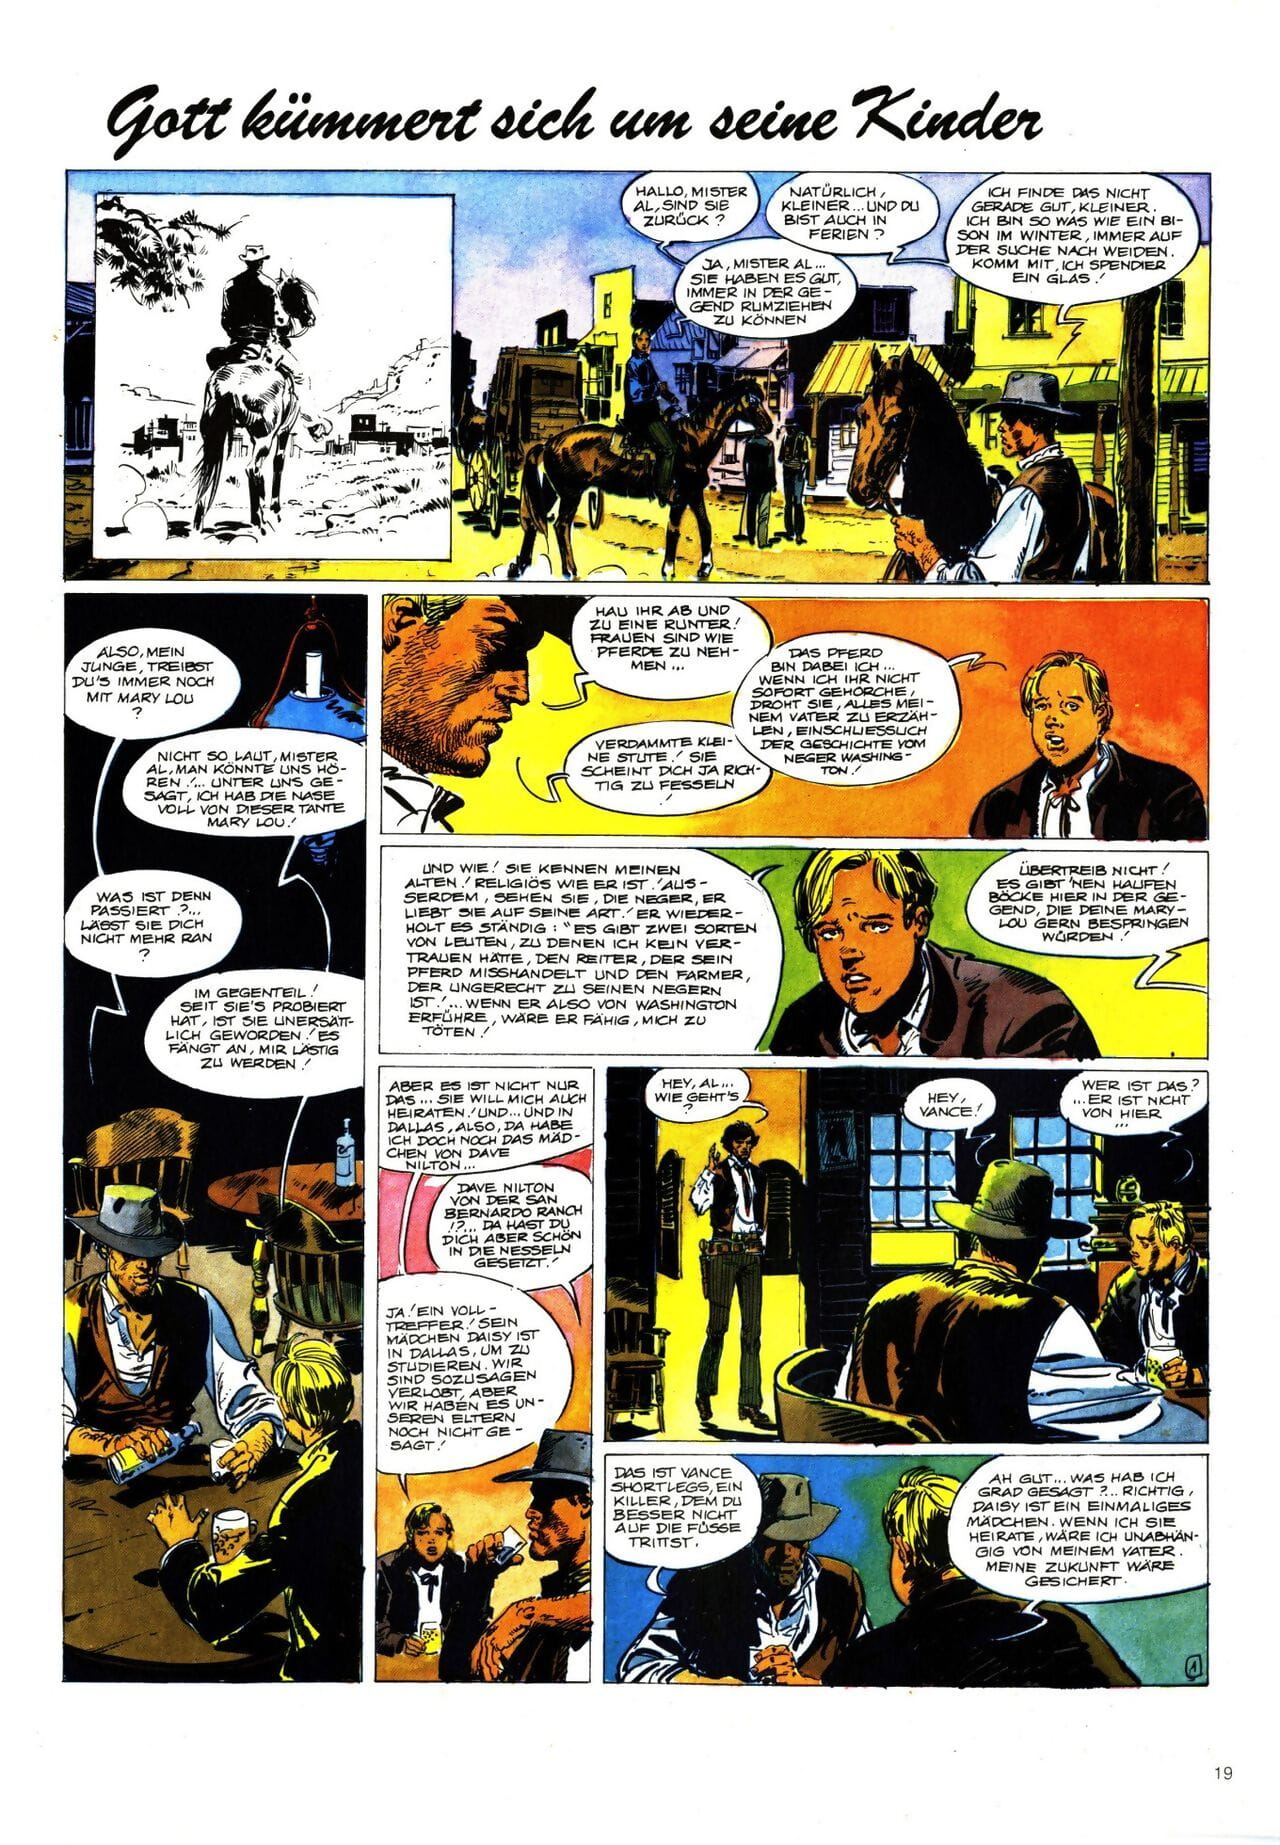 piloto #007 page 1